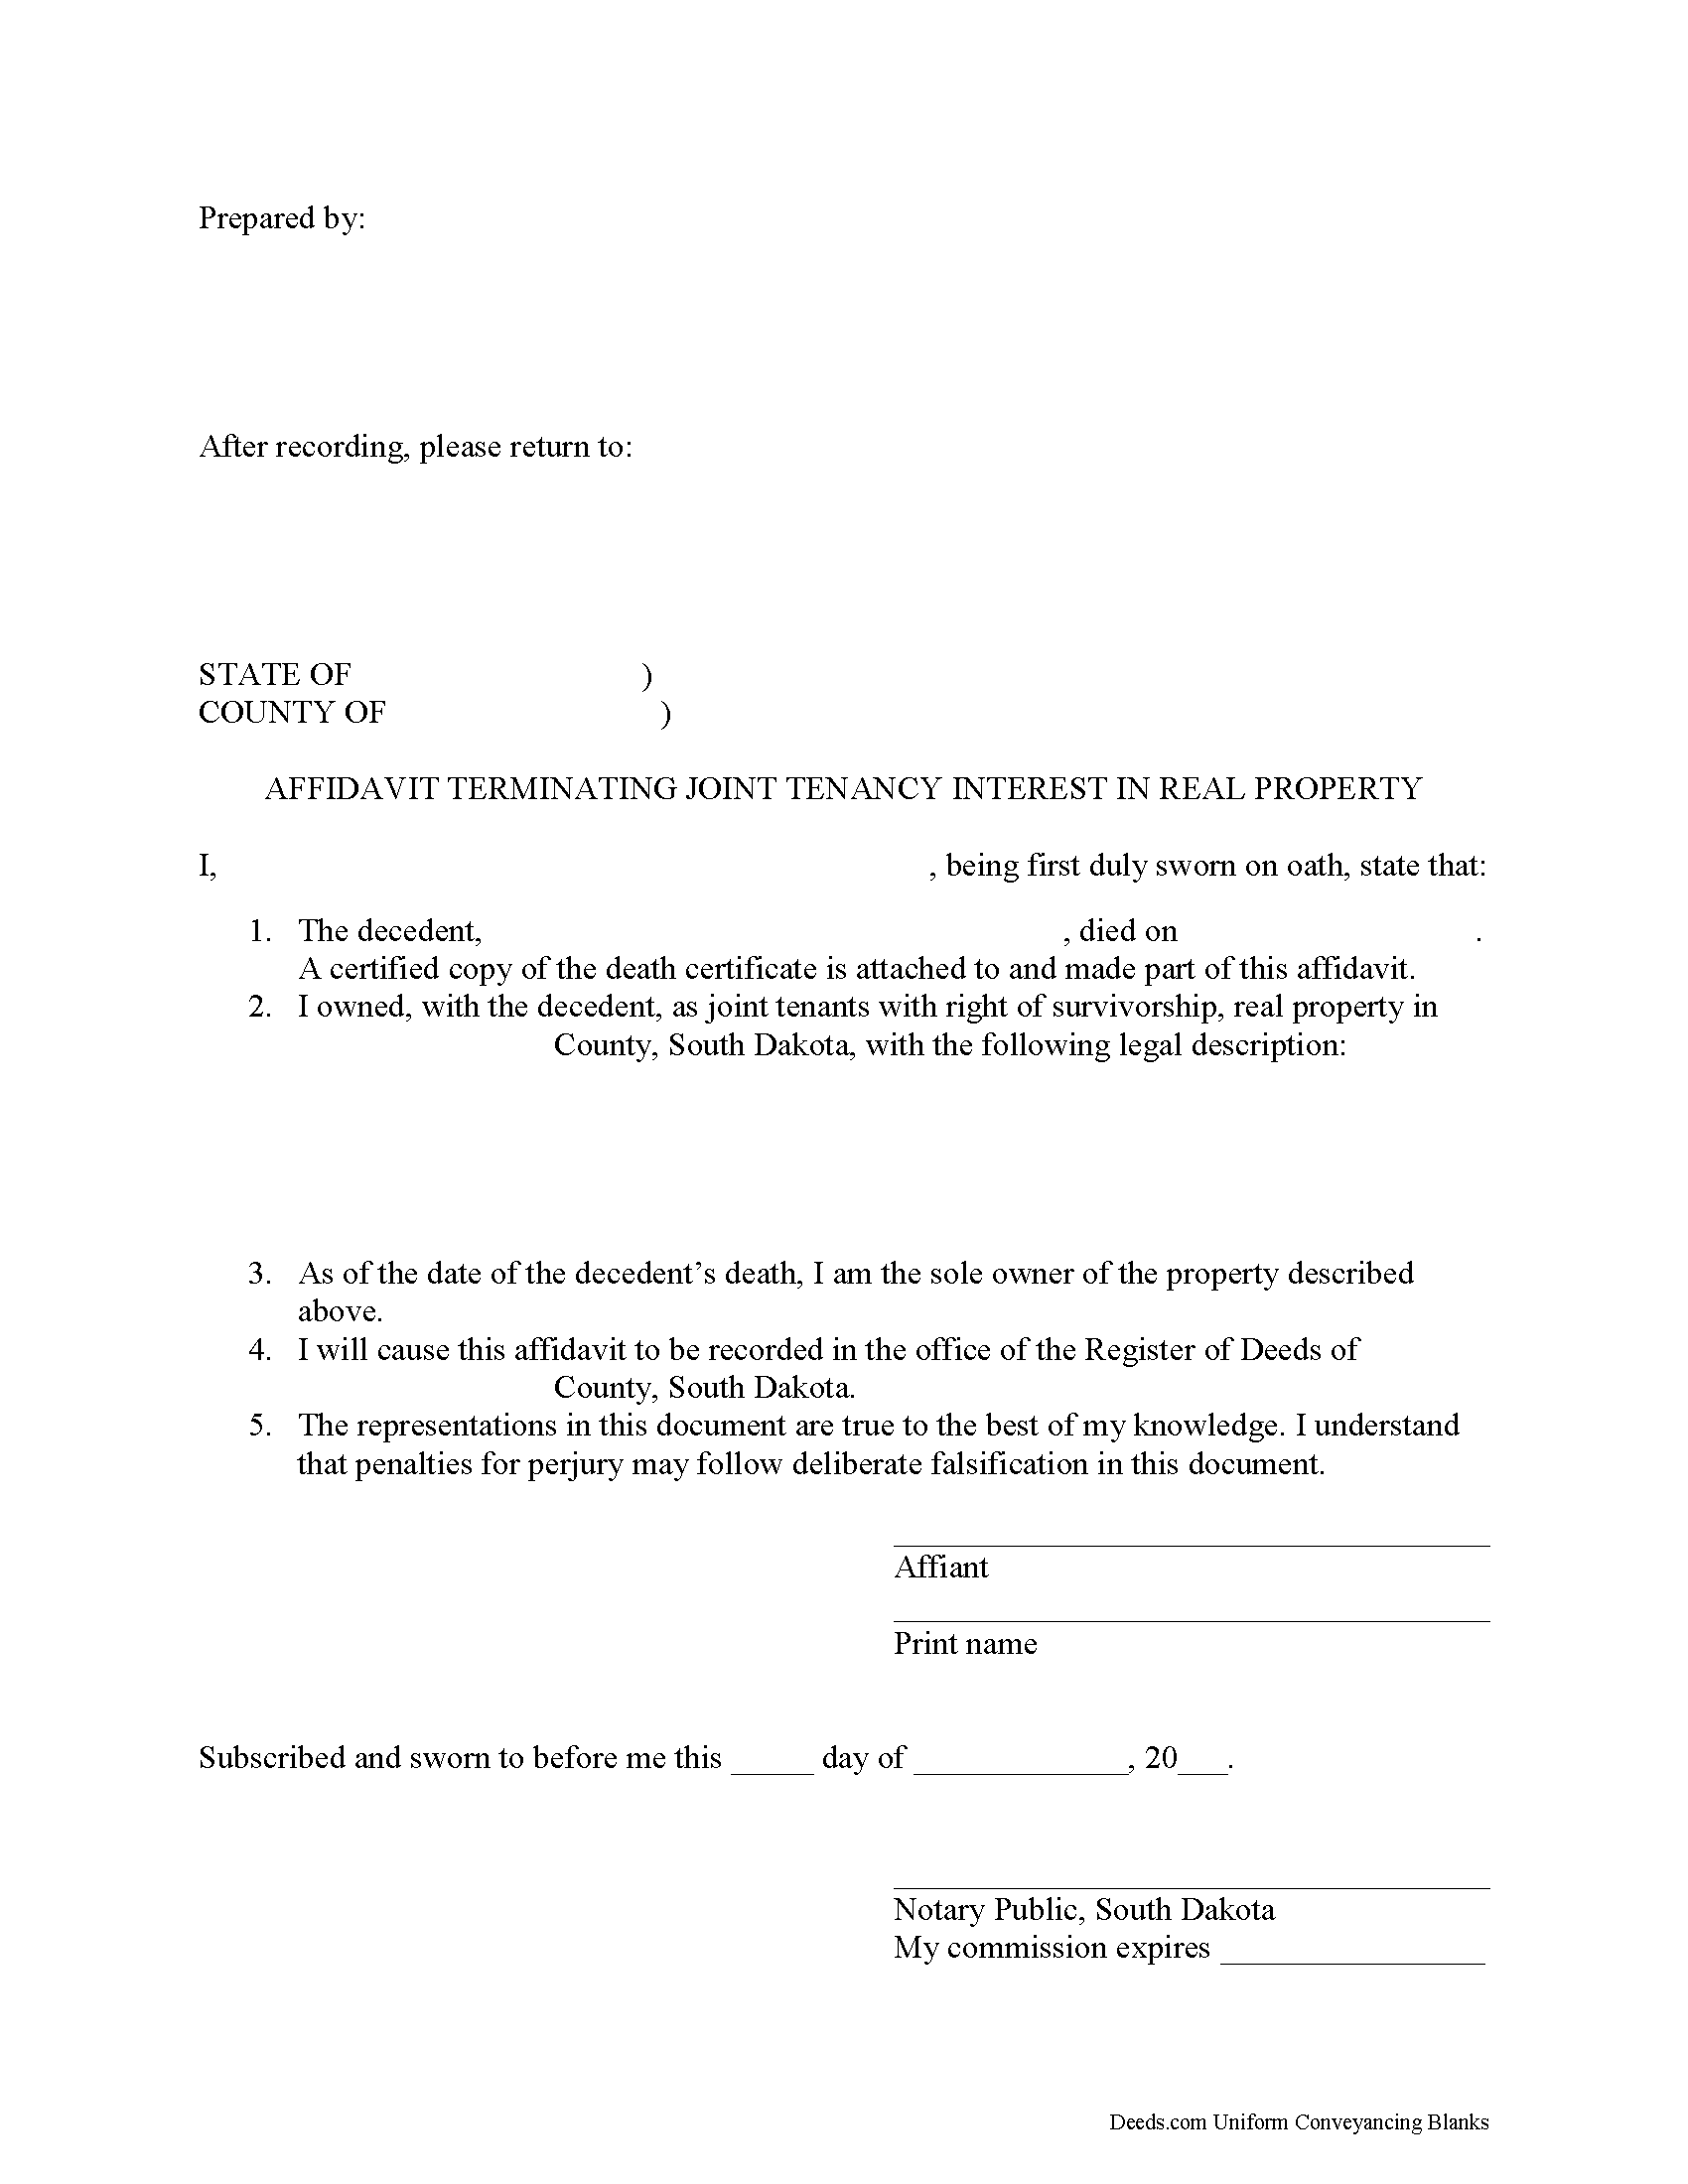 Affidavit of Deceased Joint Tenant Form